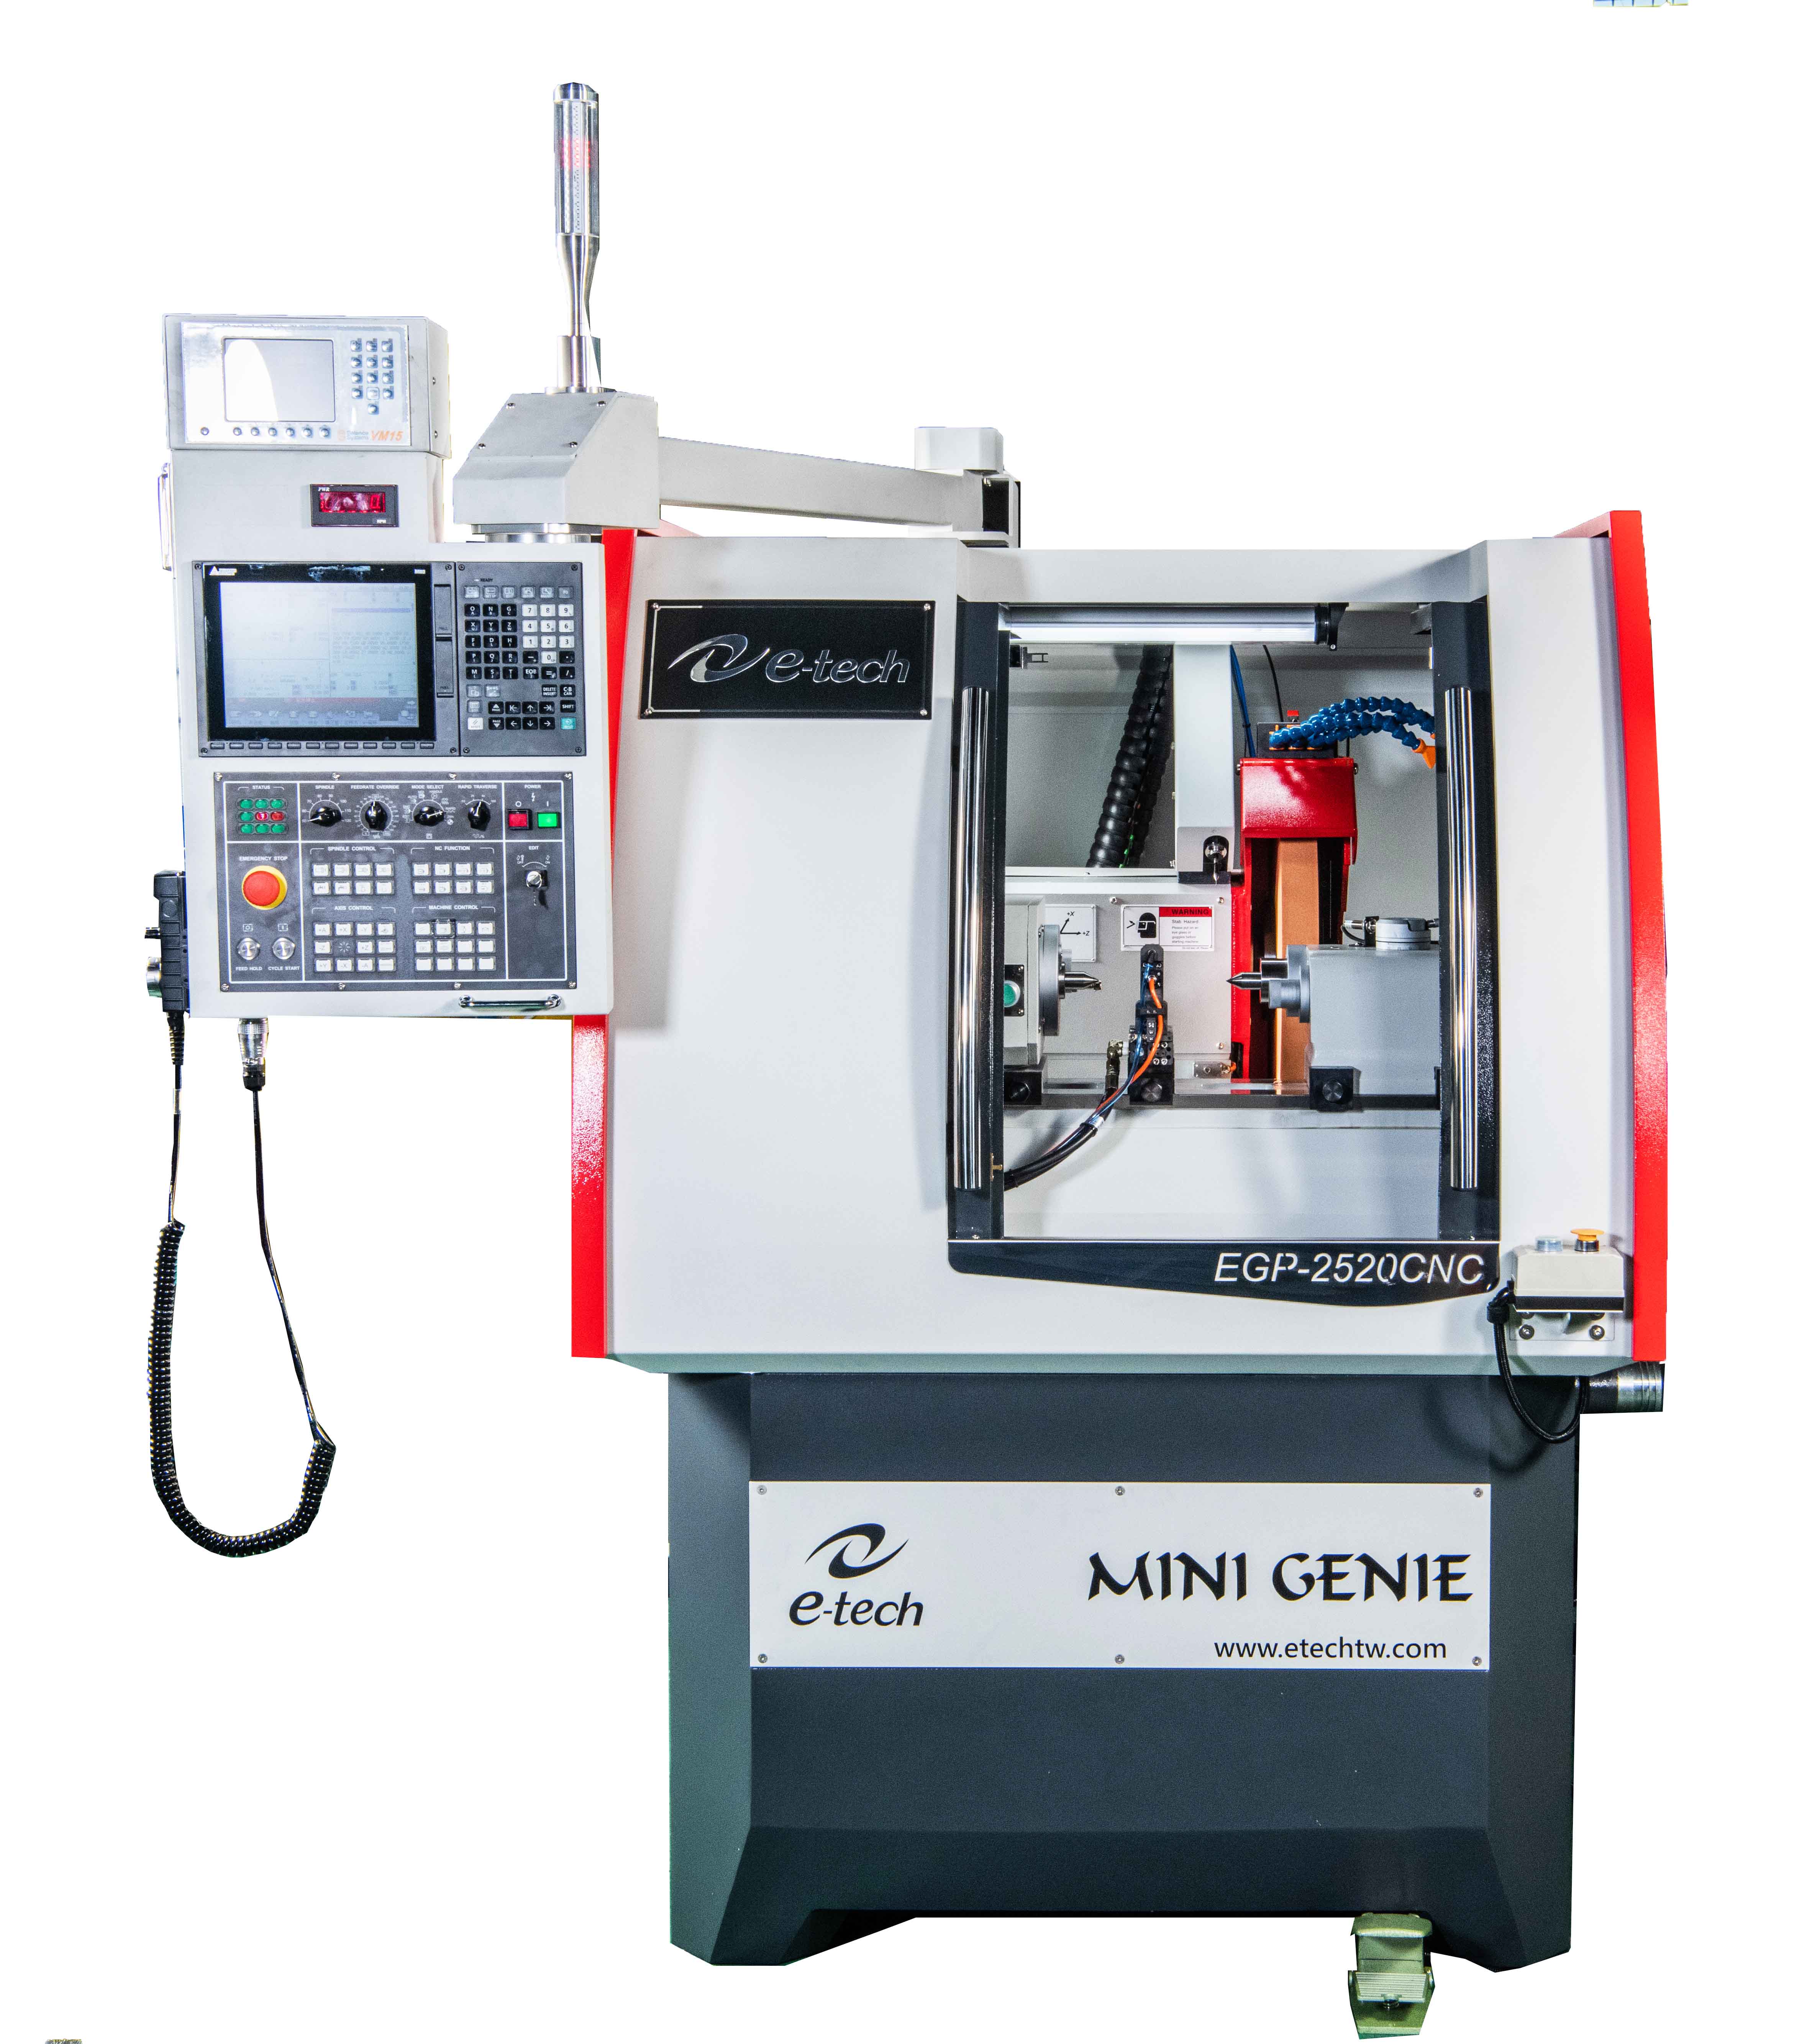 Suppliers of Mini Genie Series Grinding Machine UK